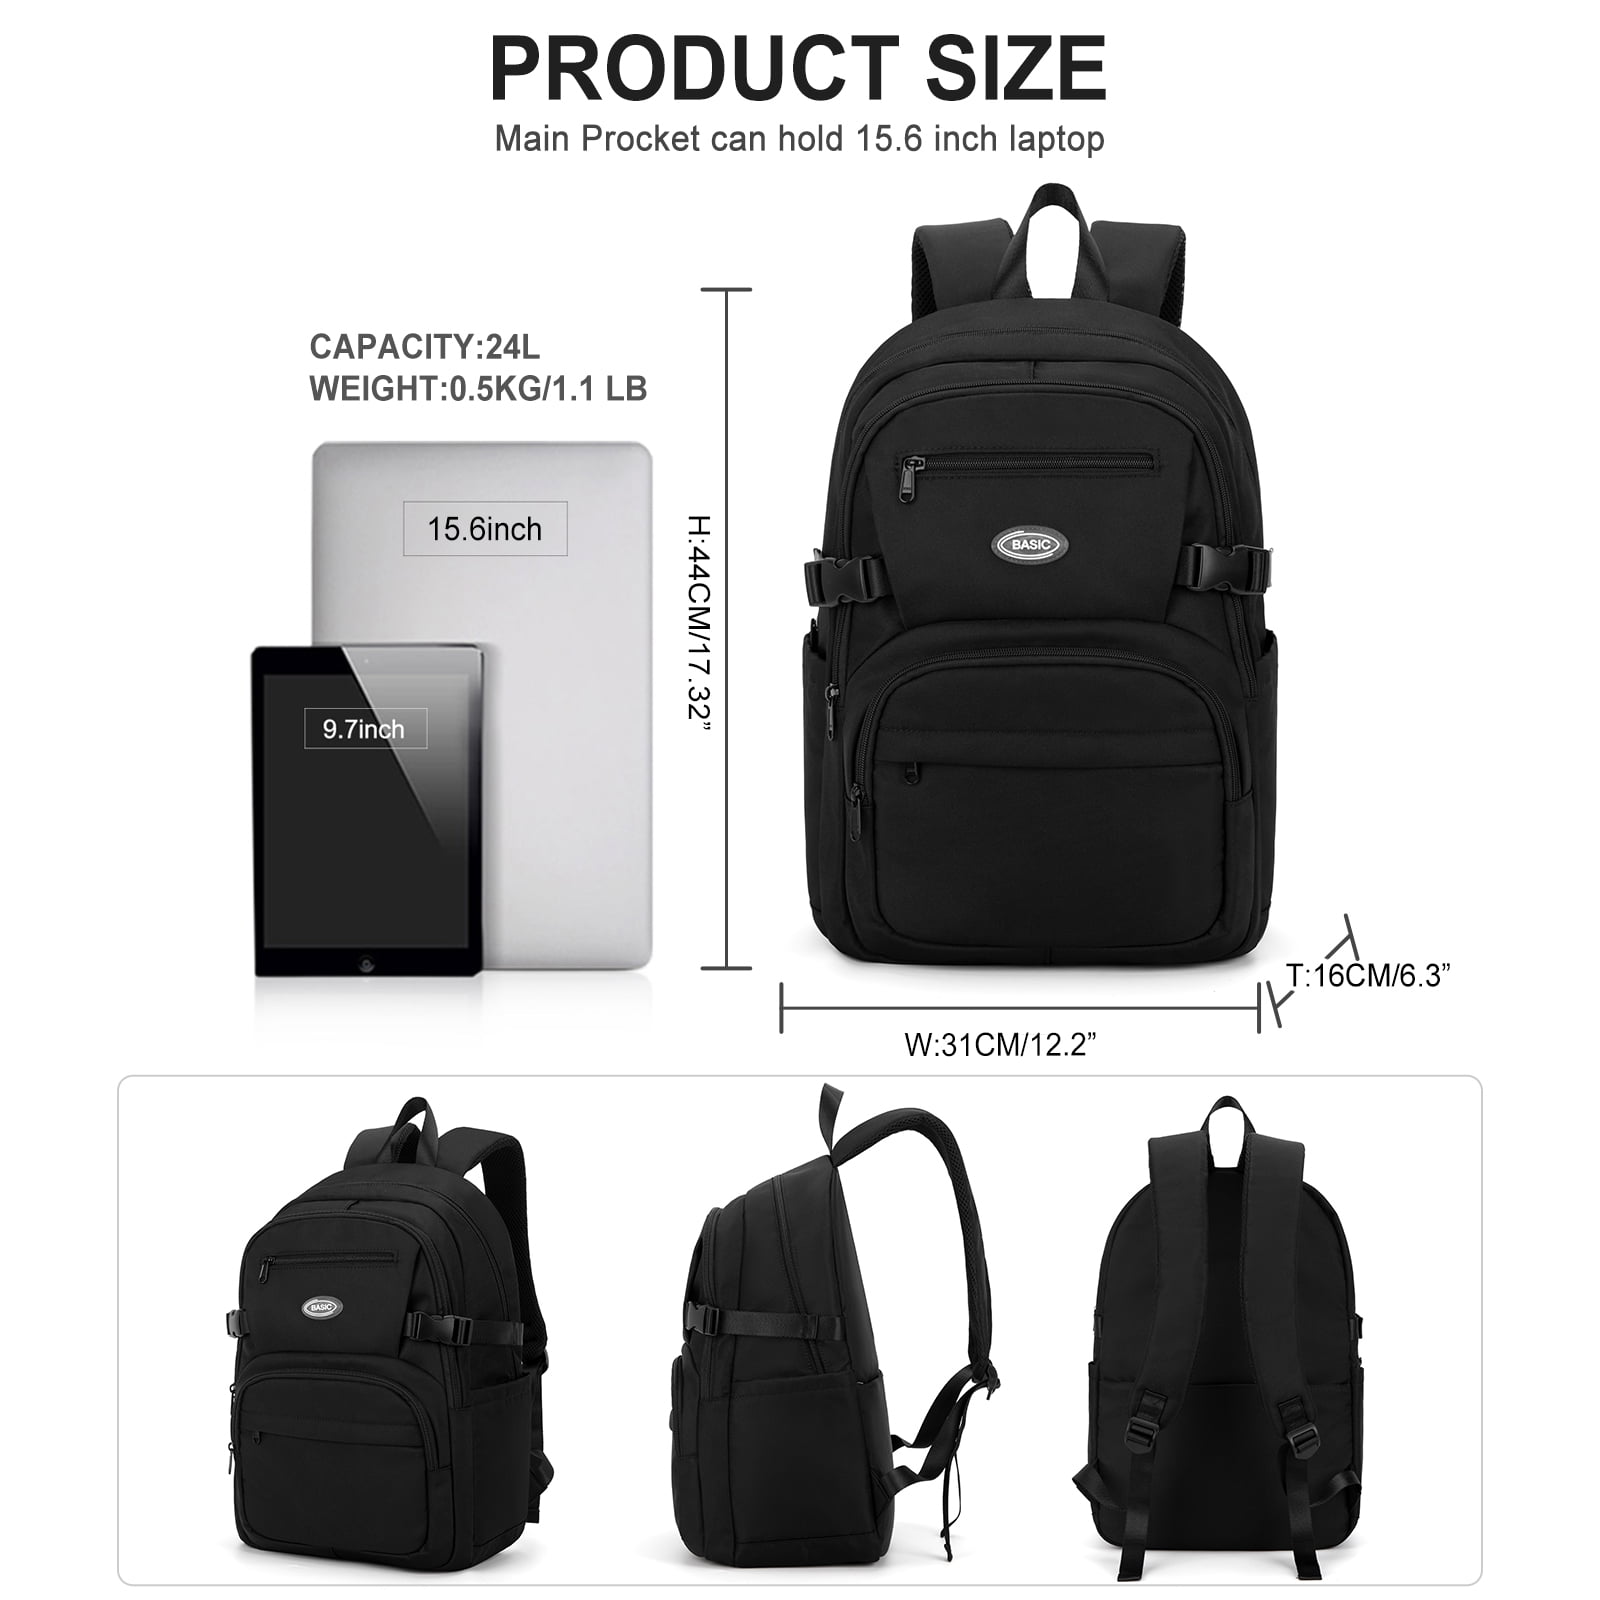 jealiot backpacks wilder 003s & runner 0702 -budget bags for camera  body,lenses,laptop & accessories - YouTube